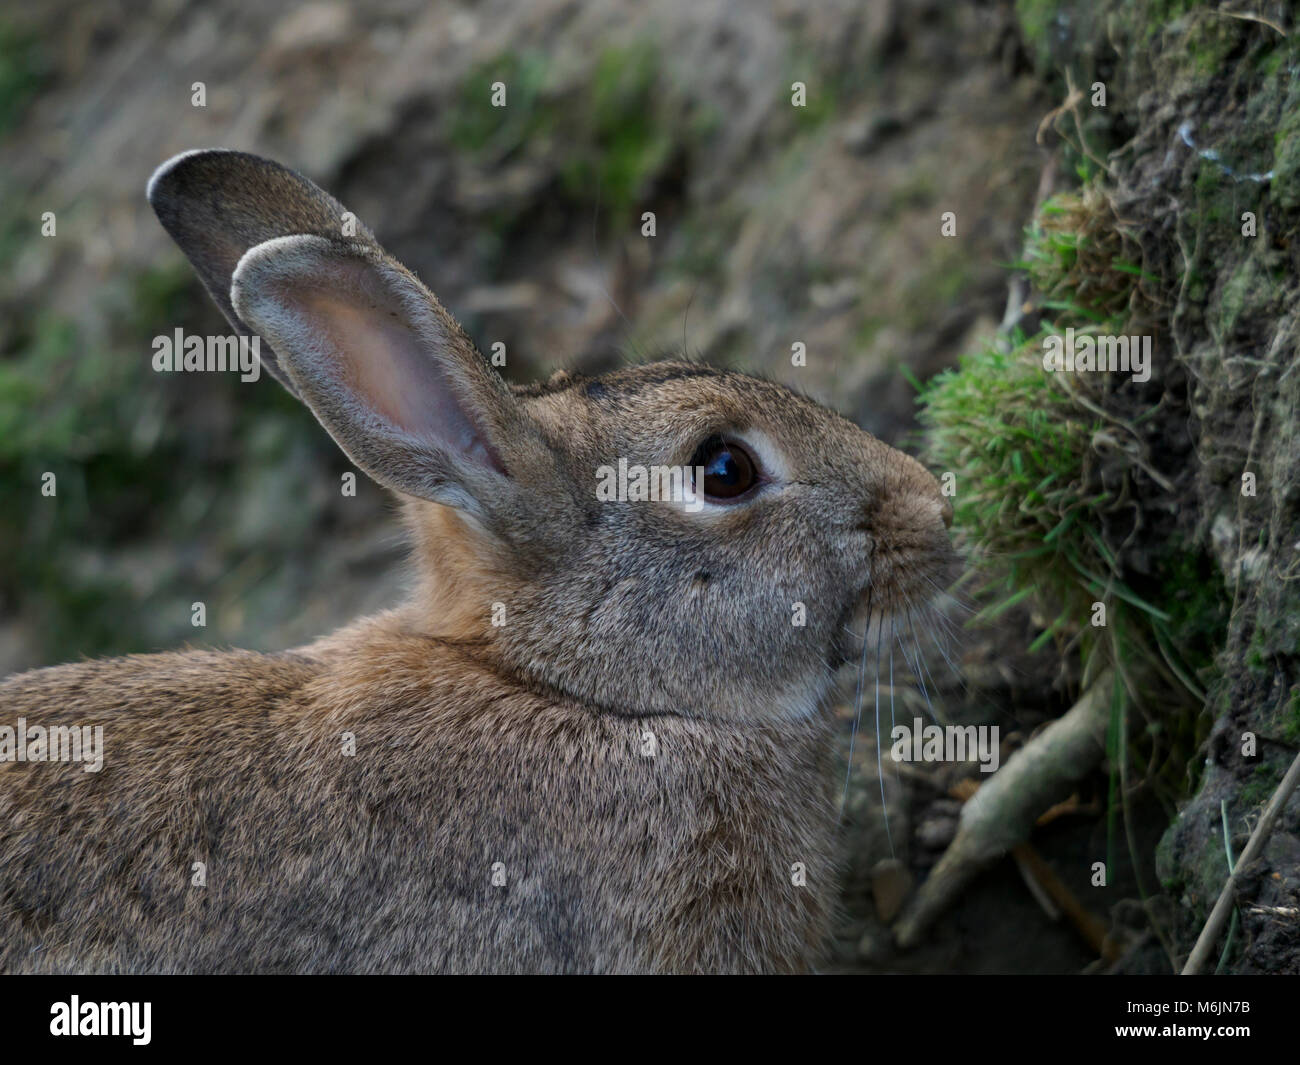 Five Sisters Zoo, near Livingston, Scotland. Rabbit. Stock Photo